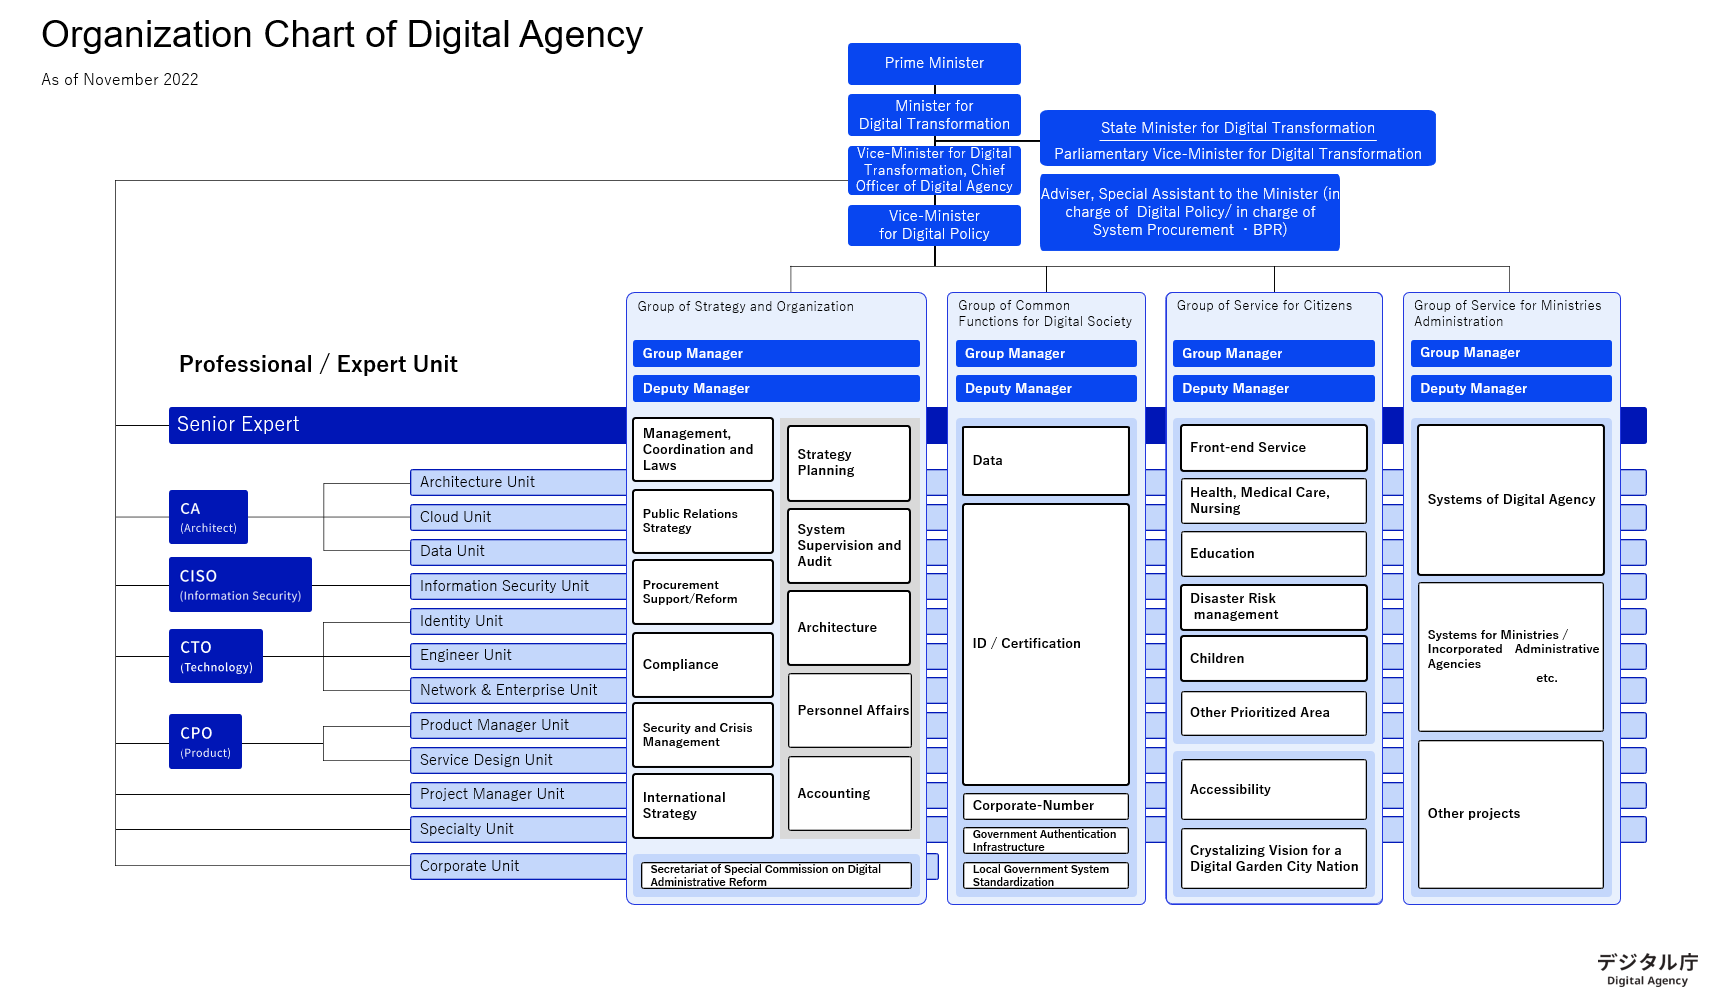 Organization Chart of Digital Agency. As of November 2022